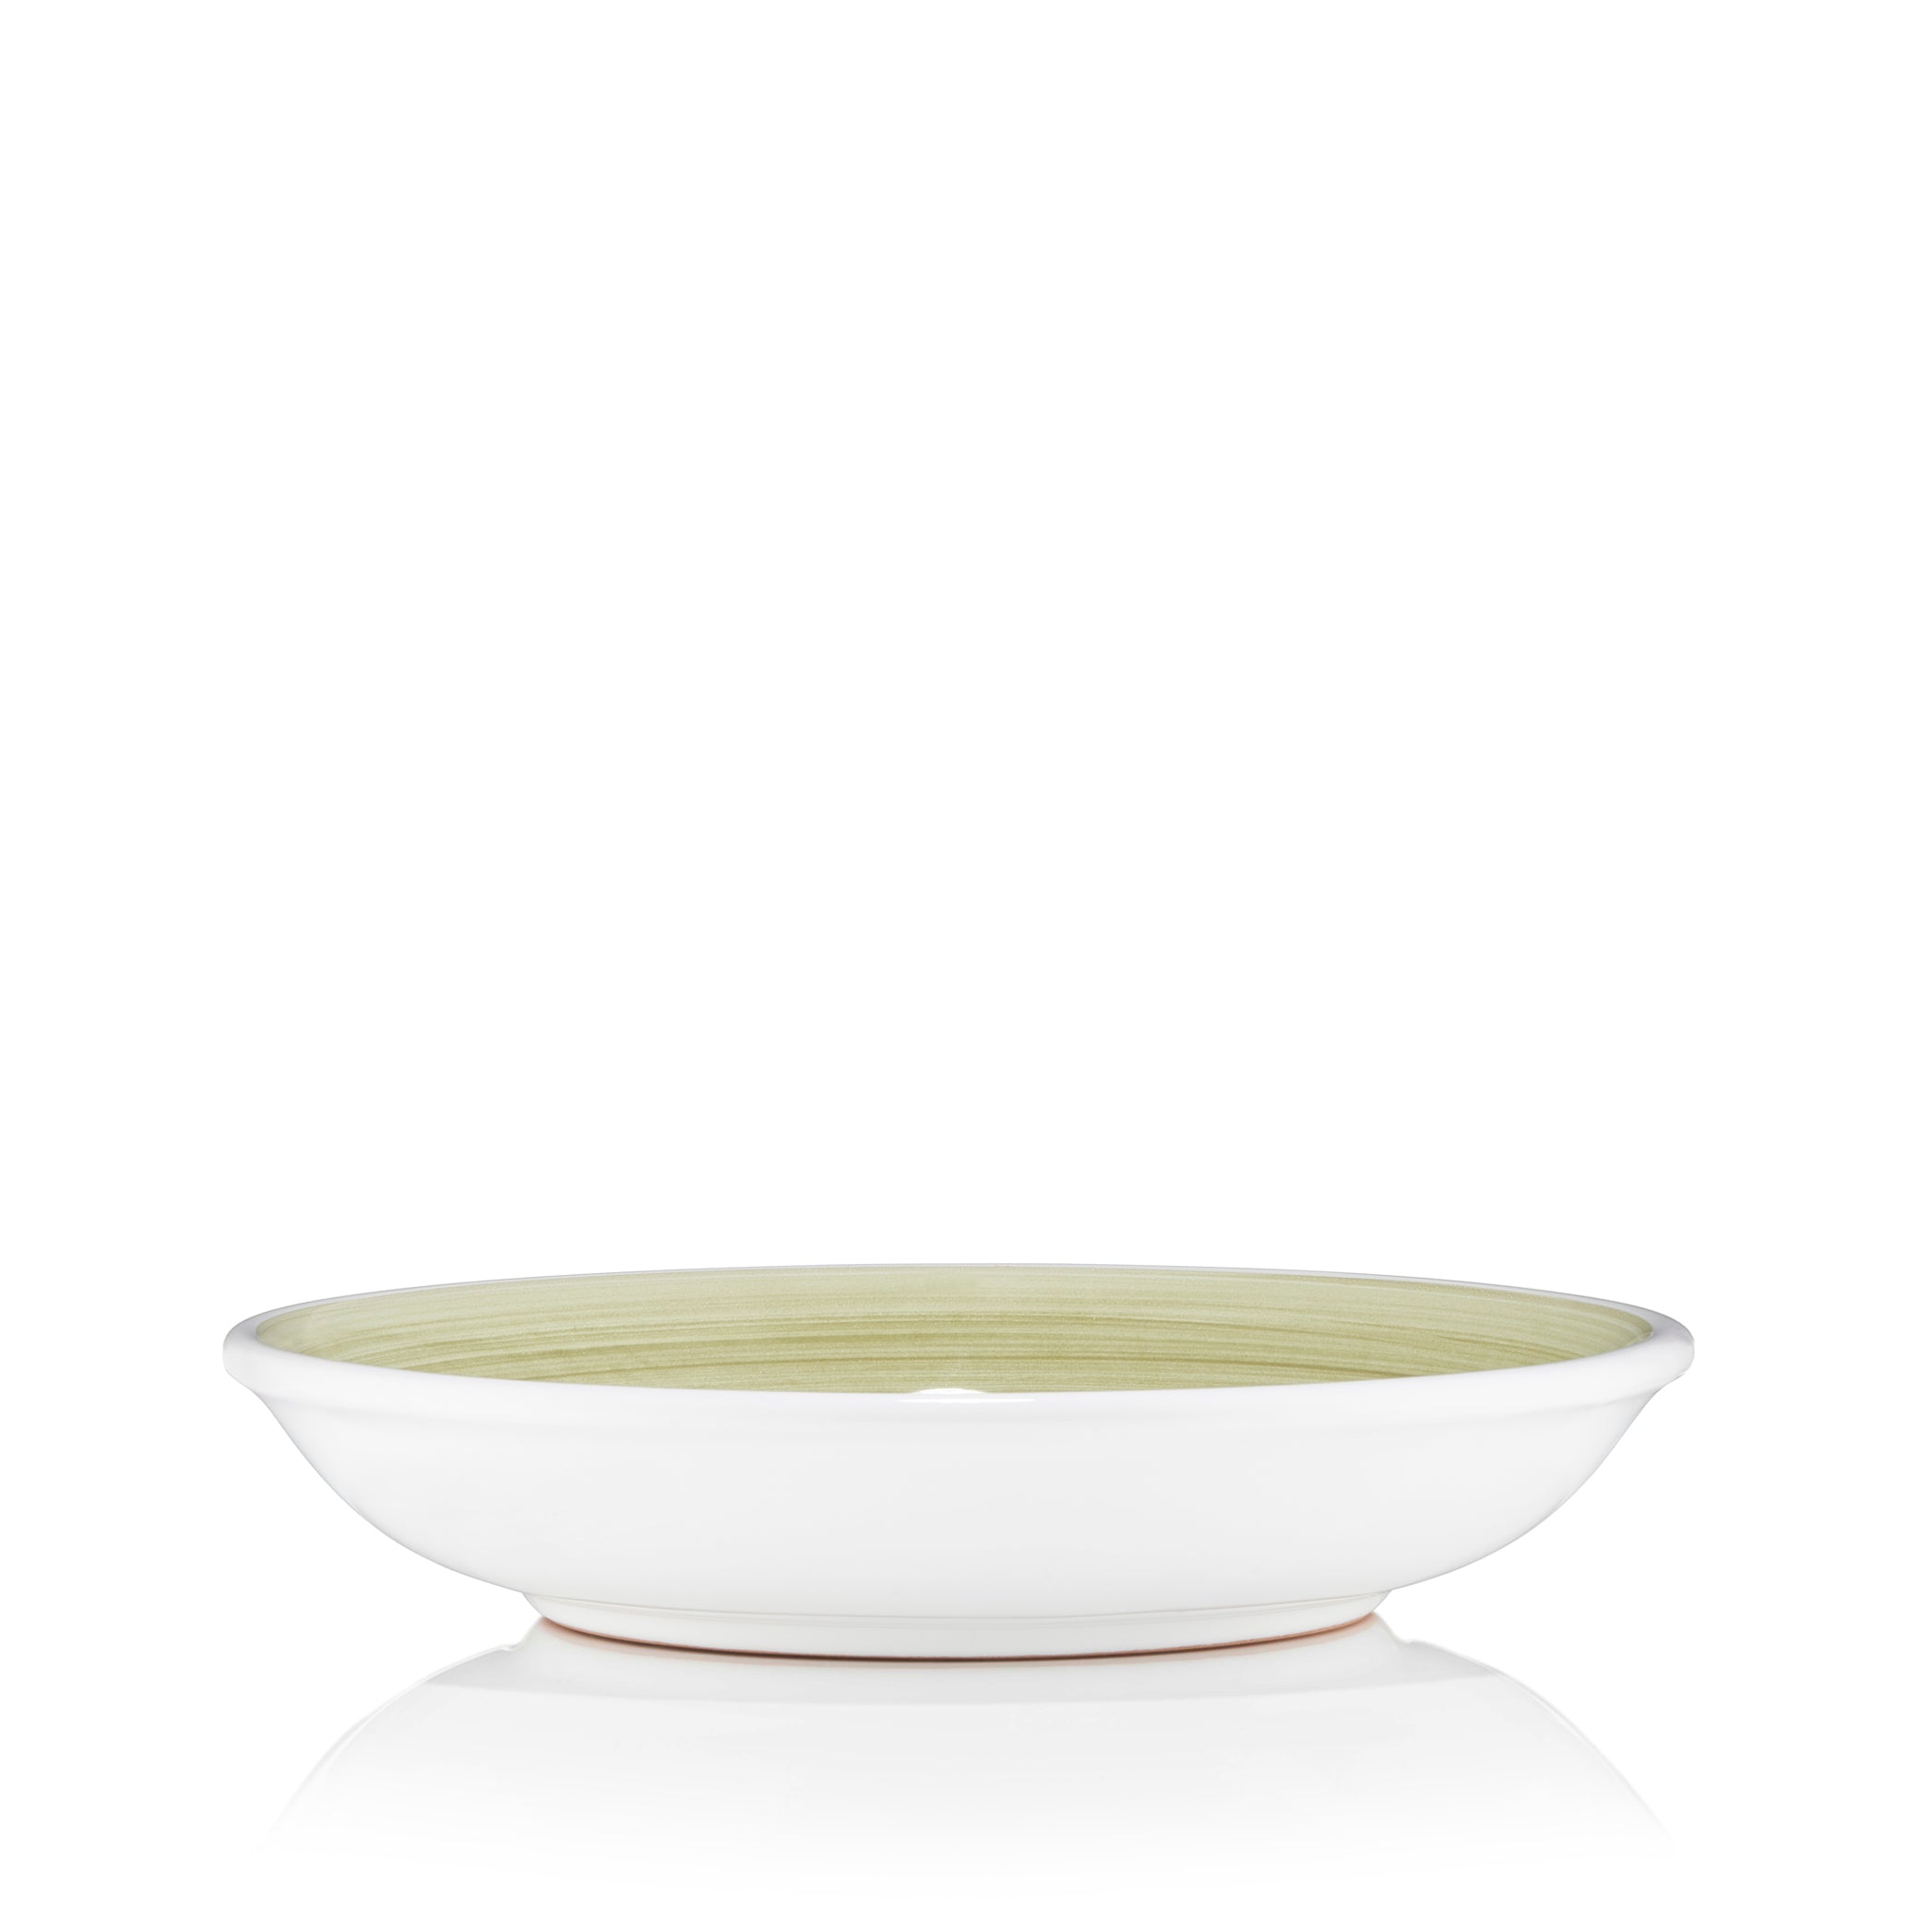 S&B 'Brushed' Ceramic Pasta Bowl in Season Green, 22cm